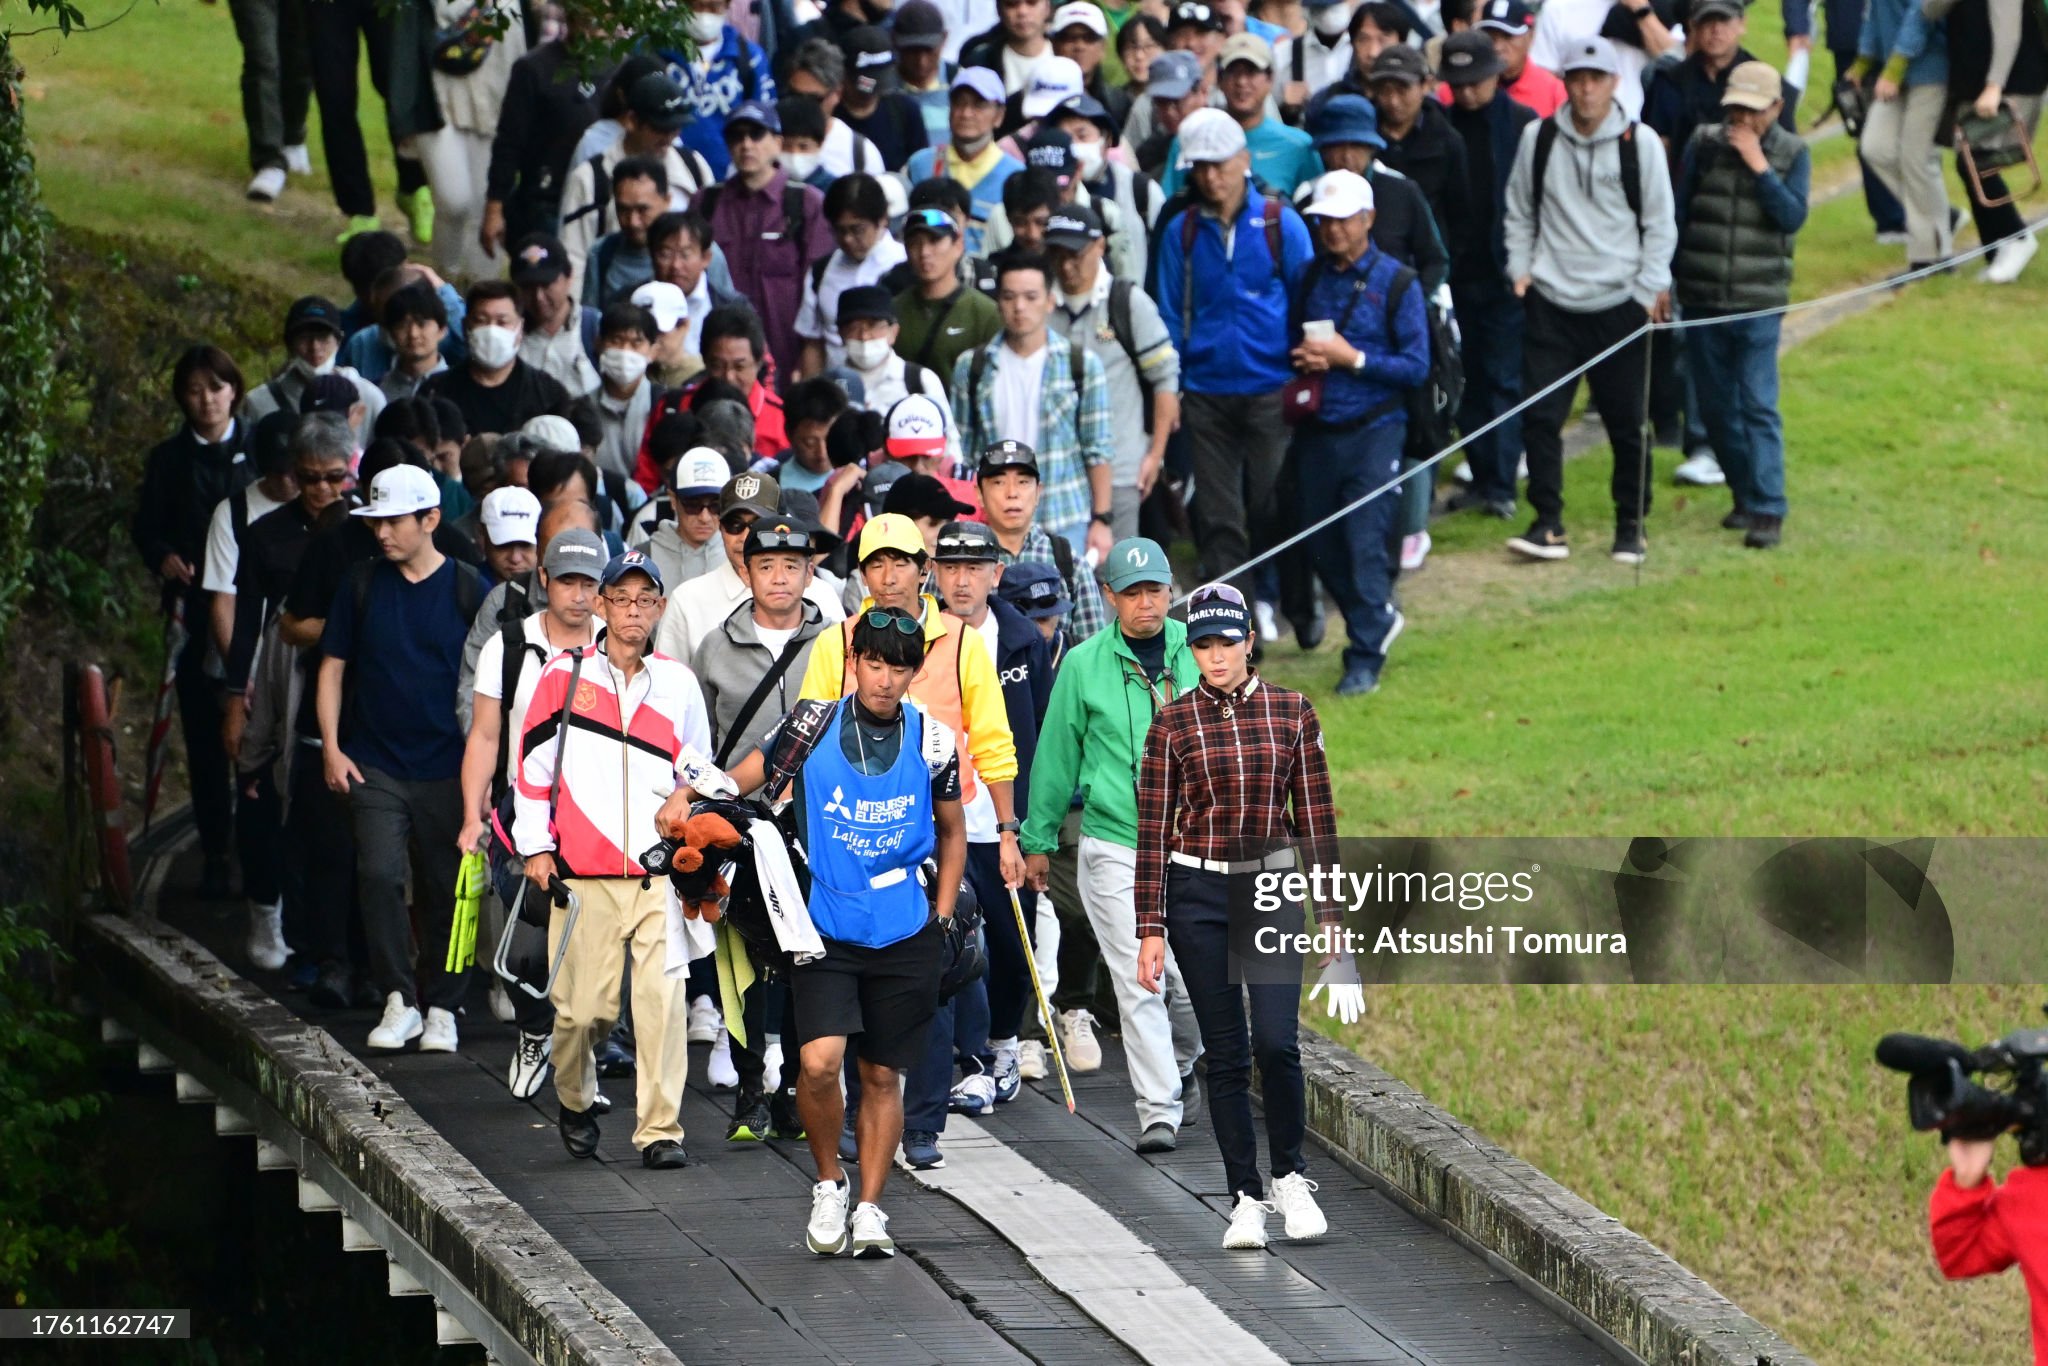 https://media.gettyimages.com/id/1761162747/photo/hisako-higuchi-mitsubishi-electric-ladies-golf-tournament-round-two.jpg?s=2048x2048&w=gi&k=20&c=x15uWRGQjDujqPkKuzDSpL3XiBccfmv5y4Pj1zUoXT0=